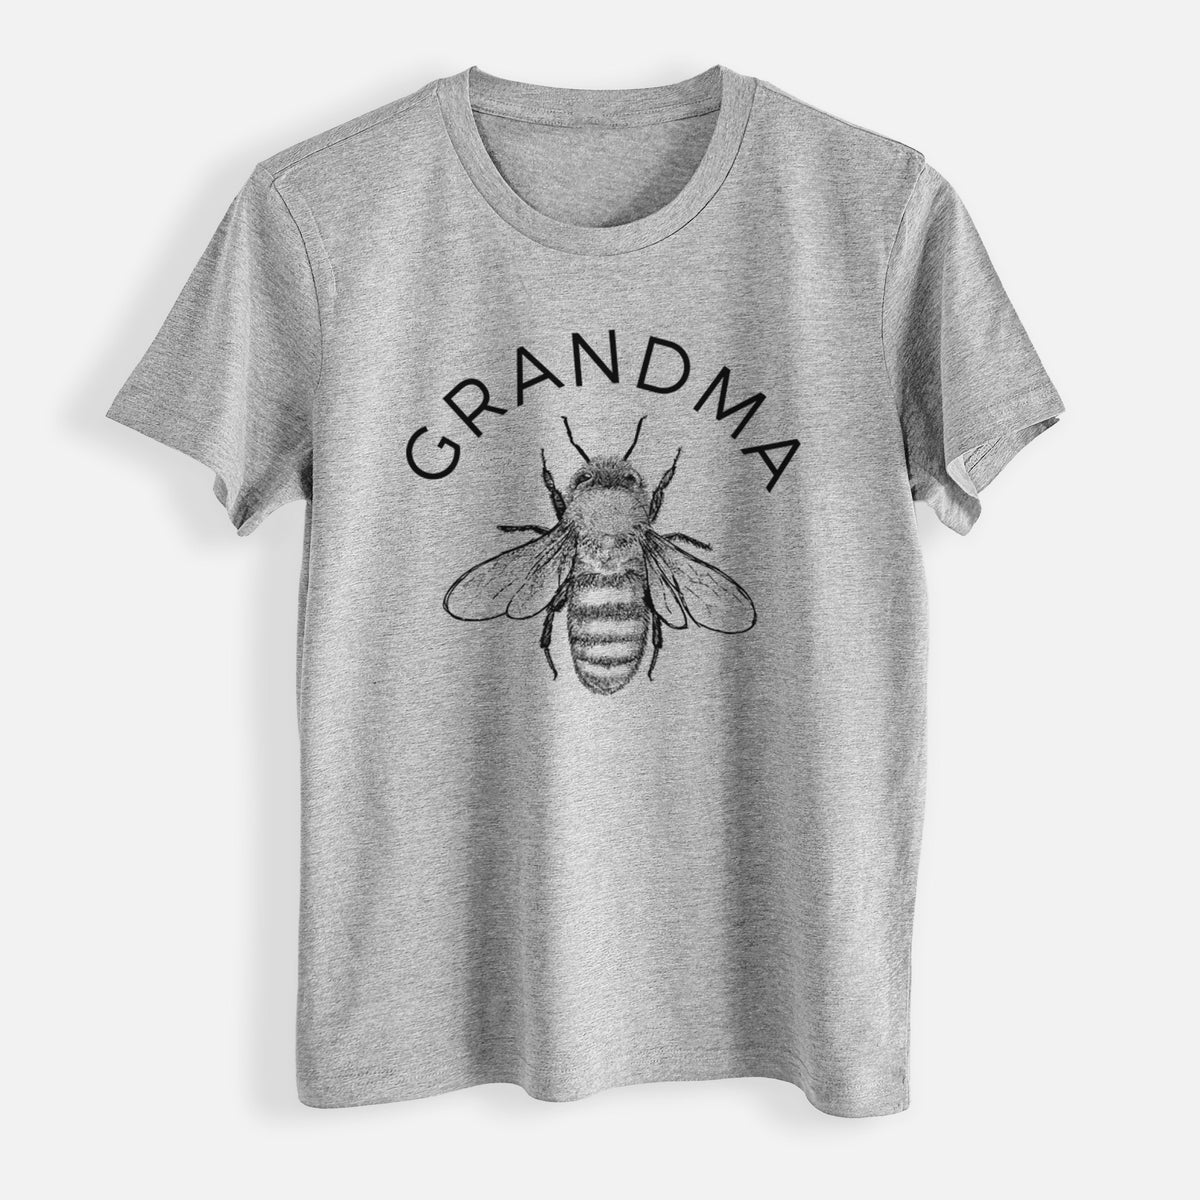 Grandma Bee - Womens Everyday Maple Tee